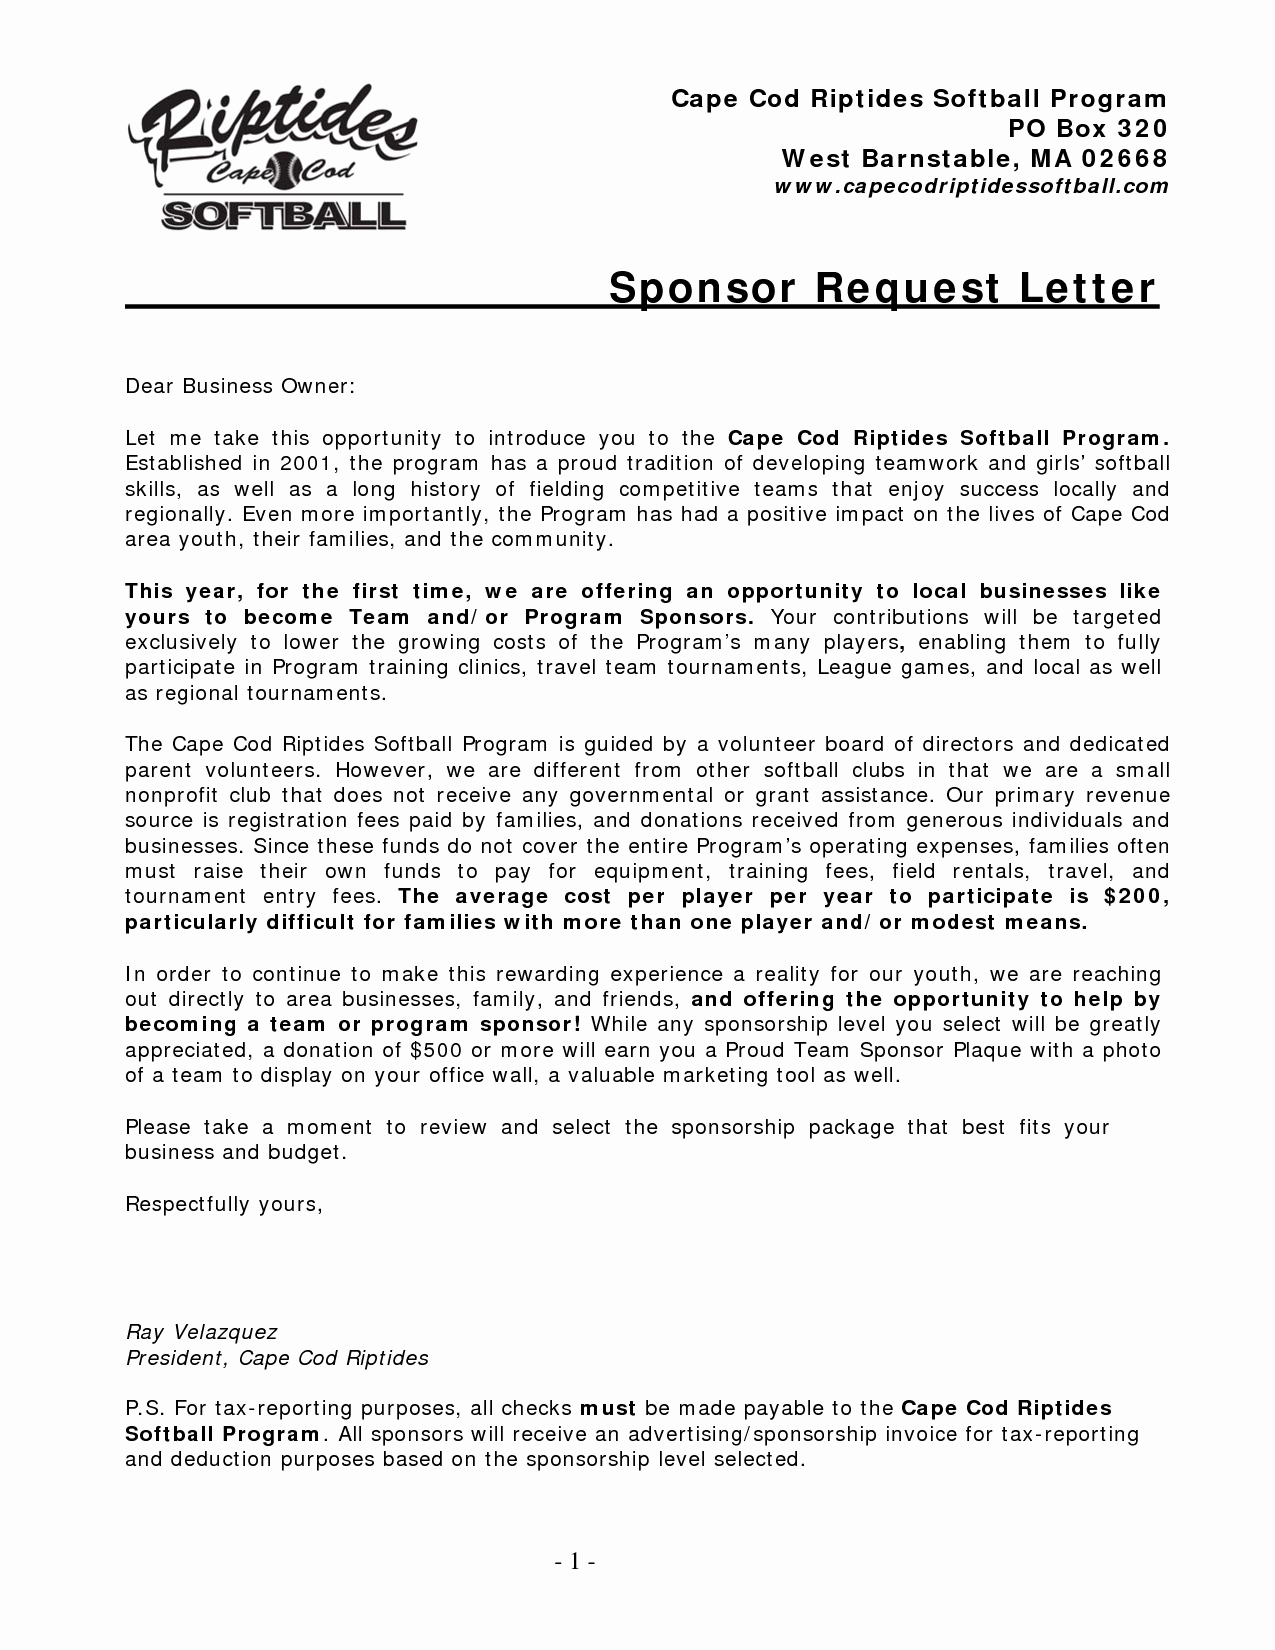 Sample Corporate Sponsorship Letter Corporate Sponsorship